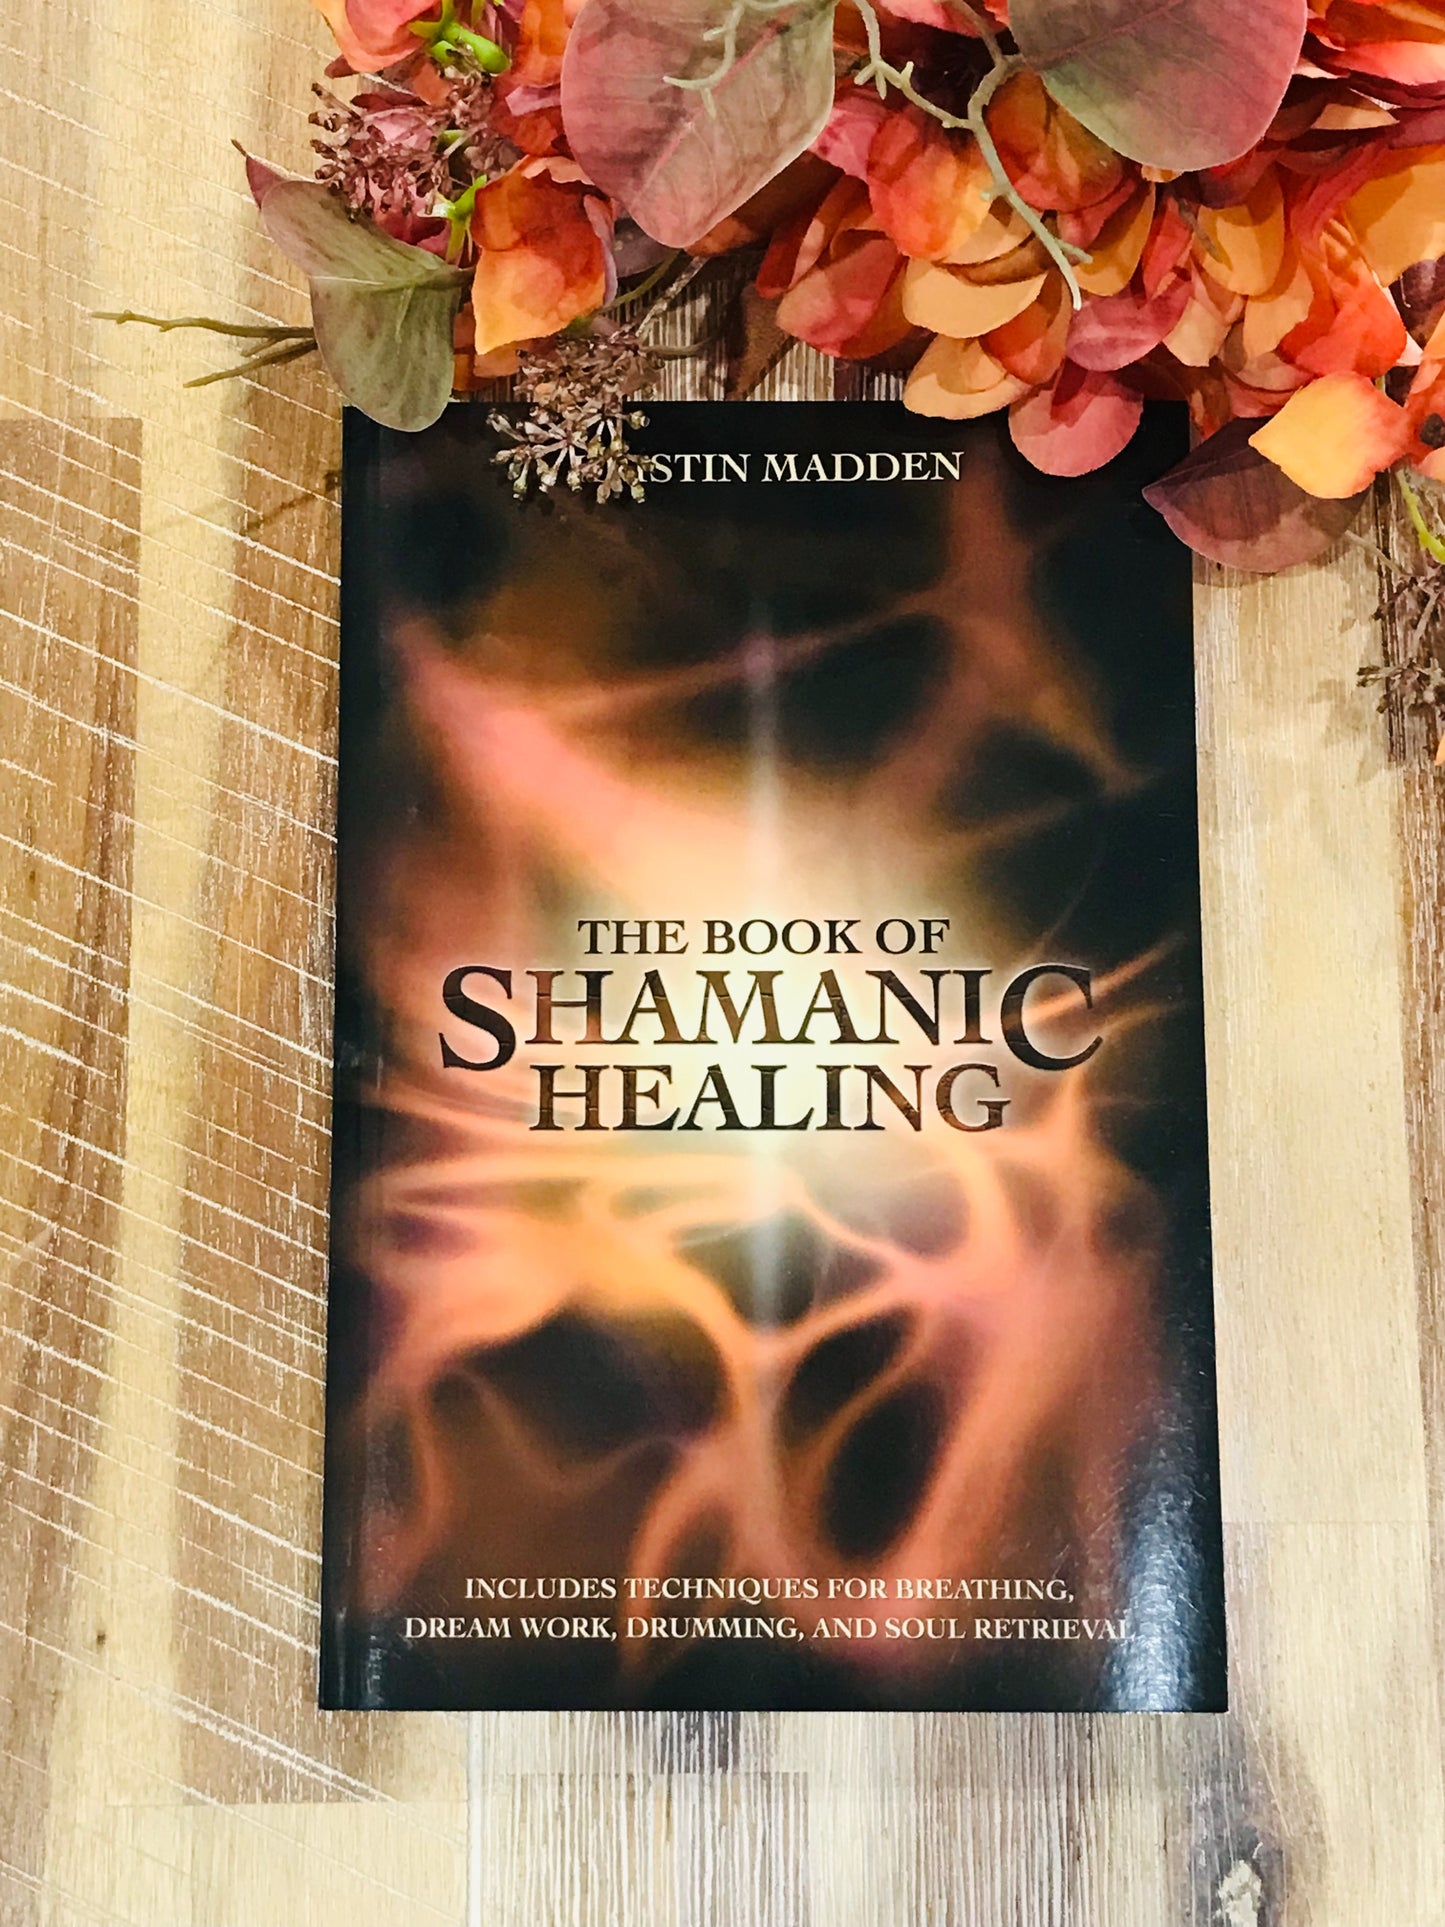 The Book of Shamanic Healing